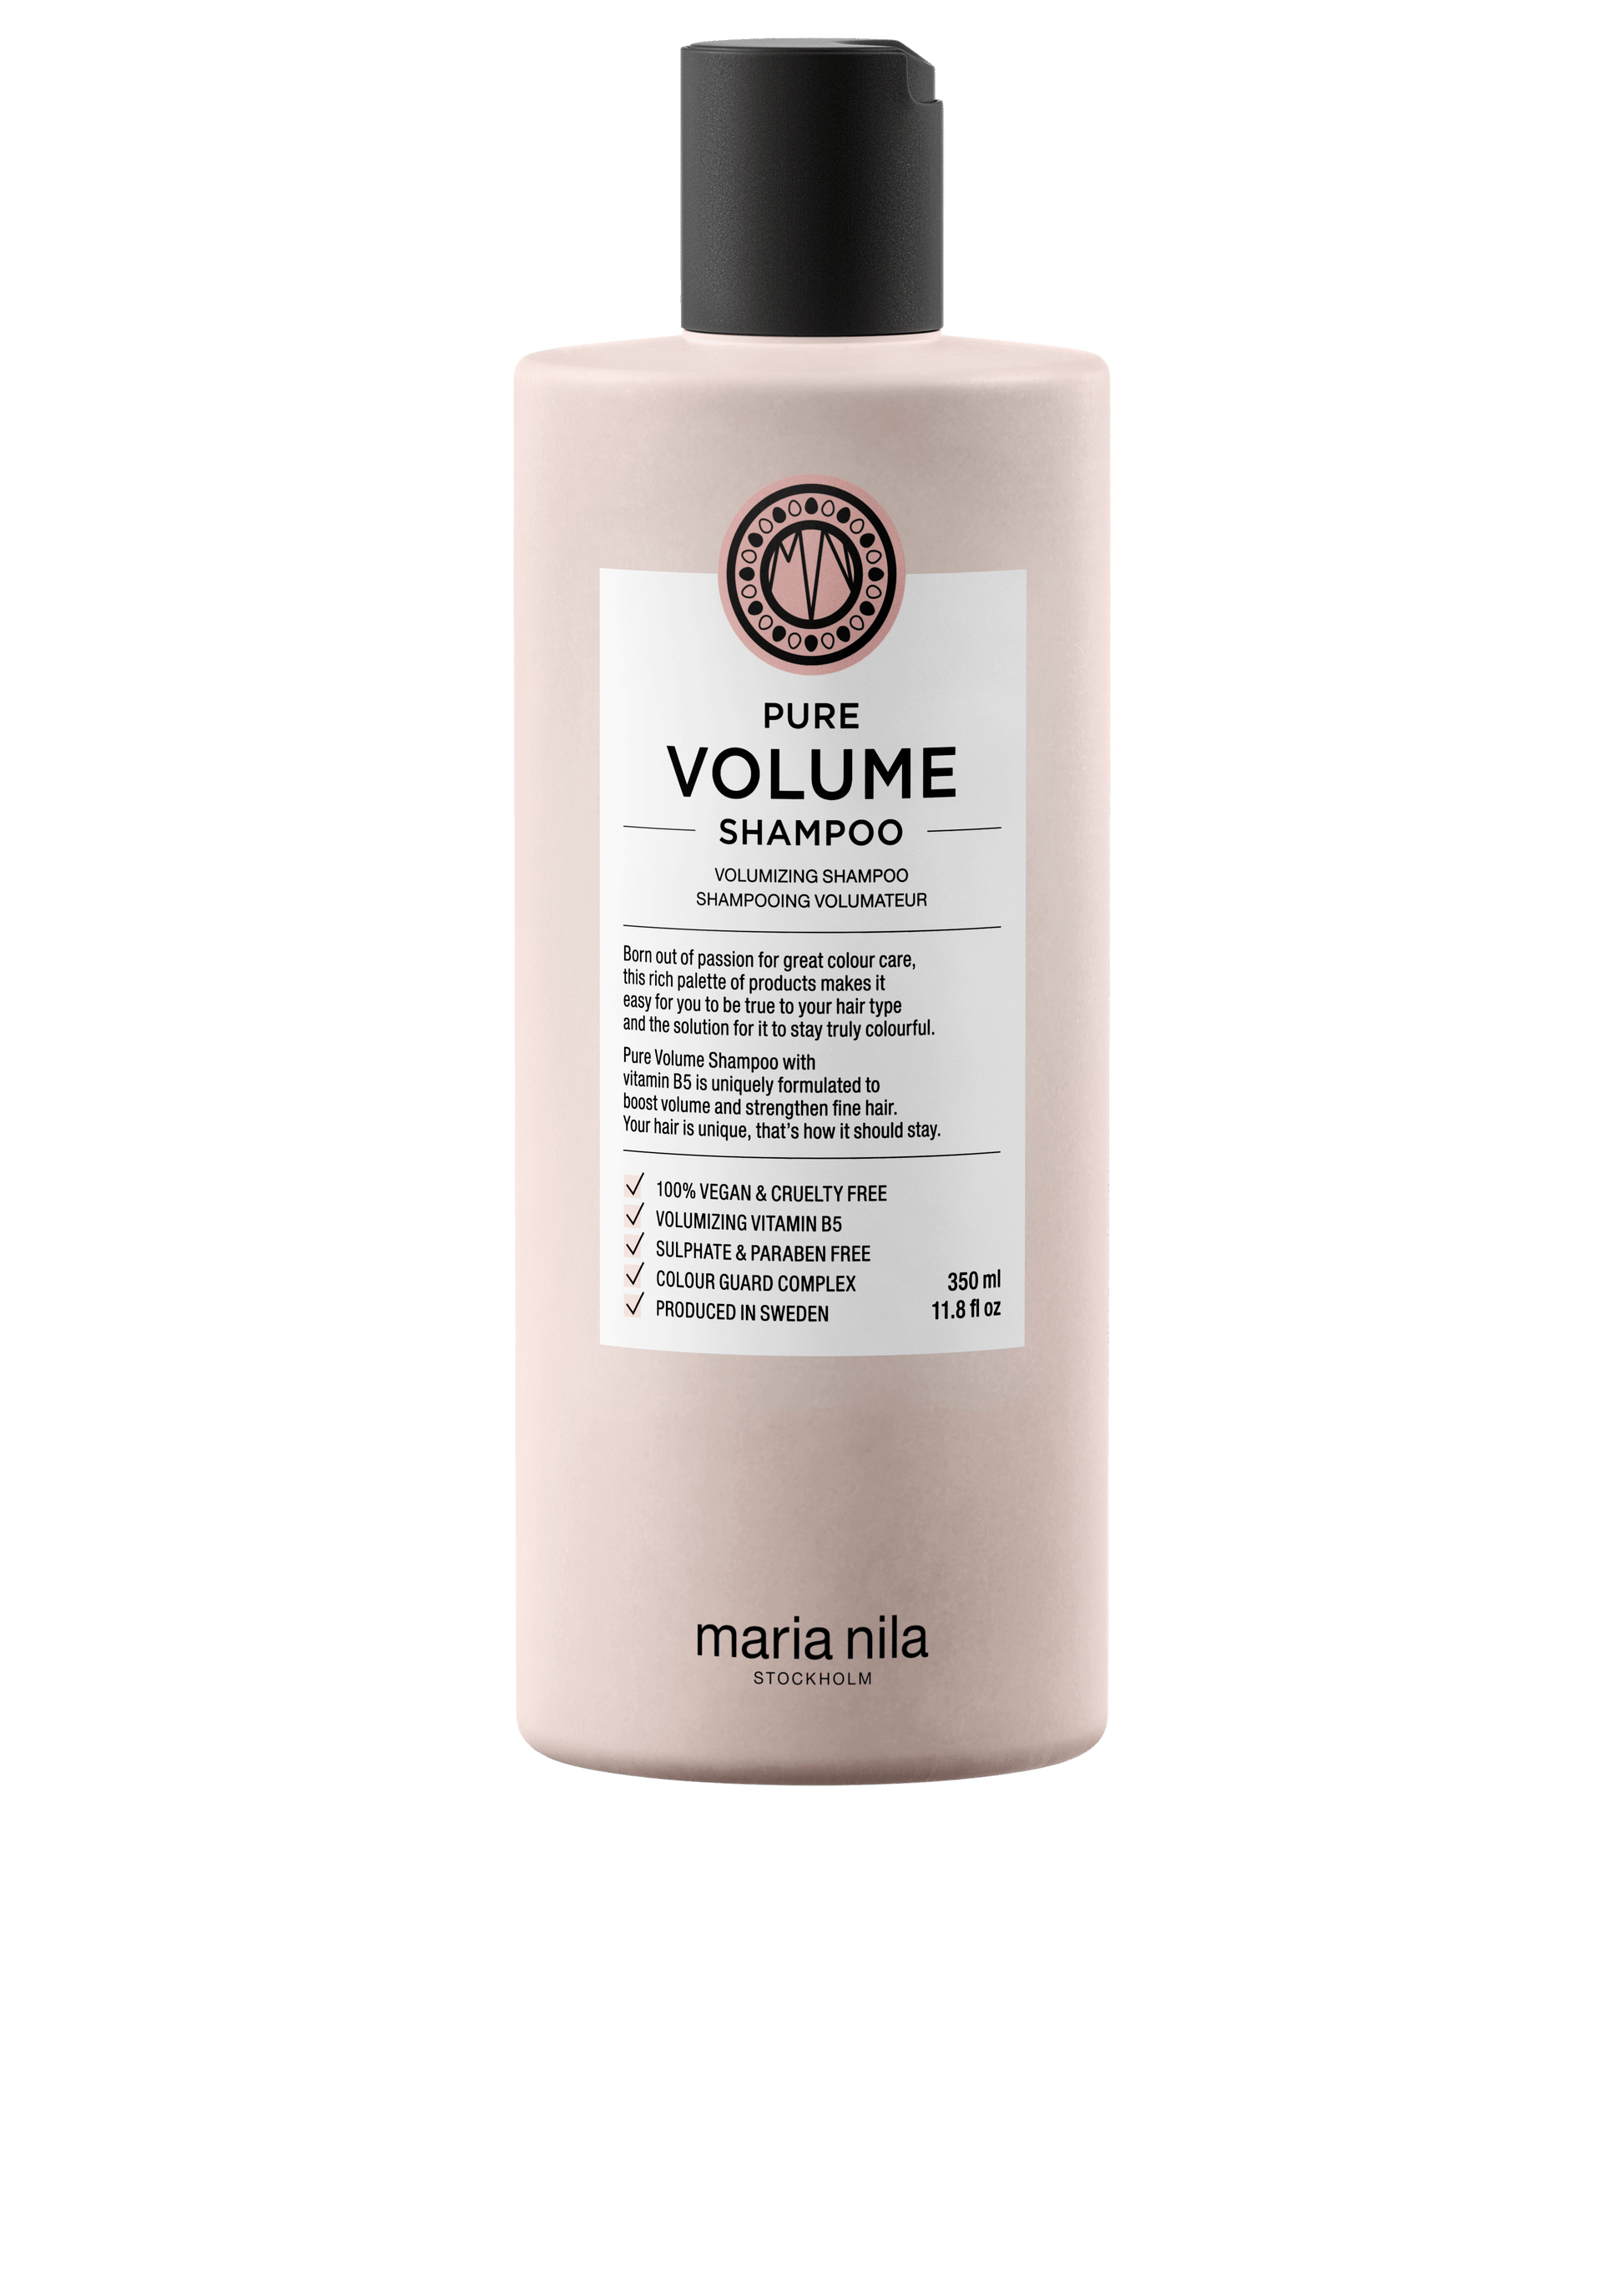 Pure Volume Shampoo - The Coloroom 